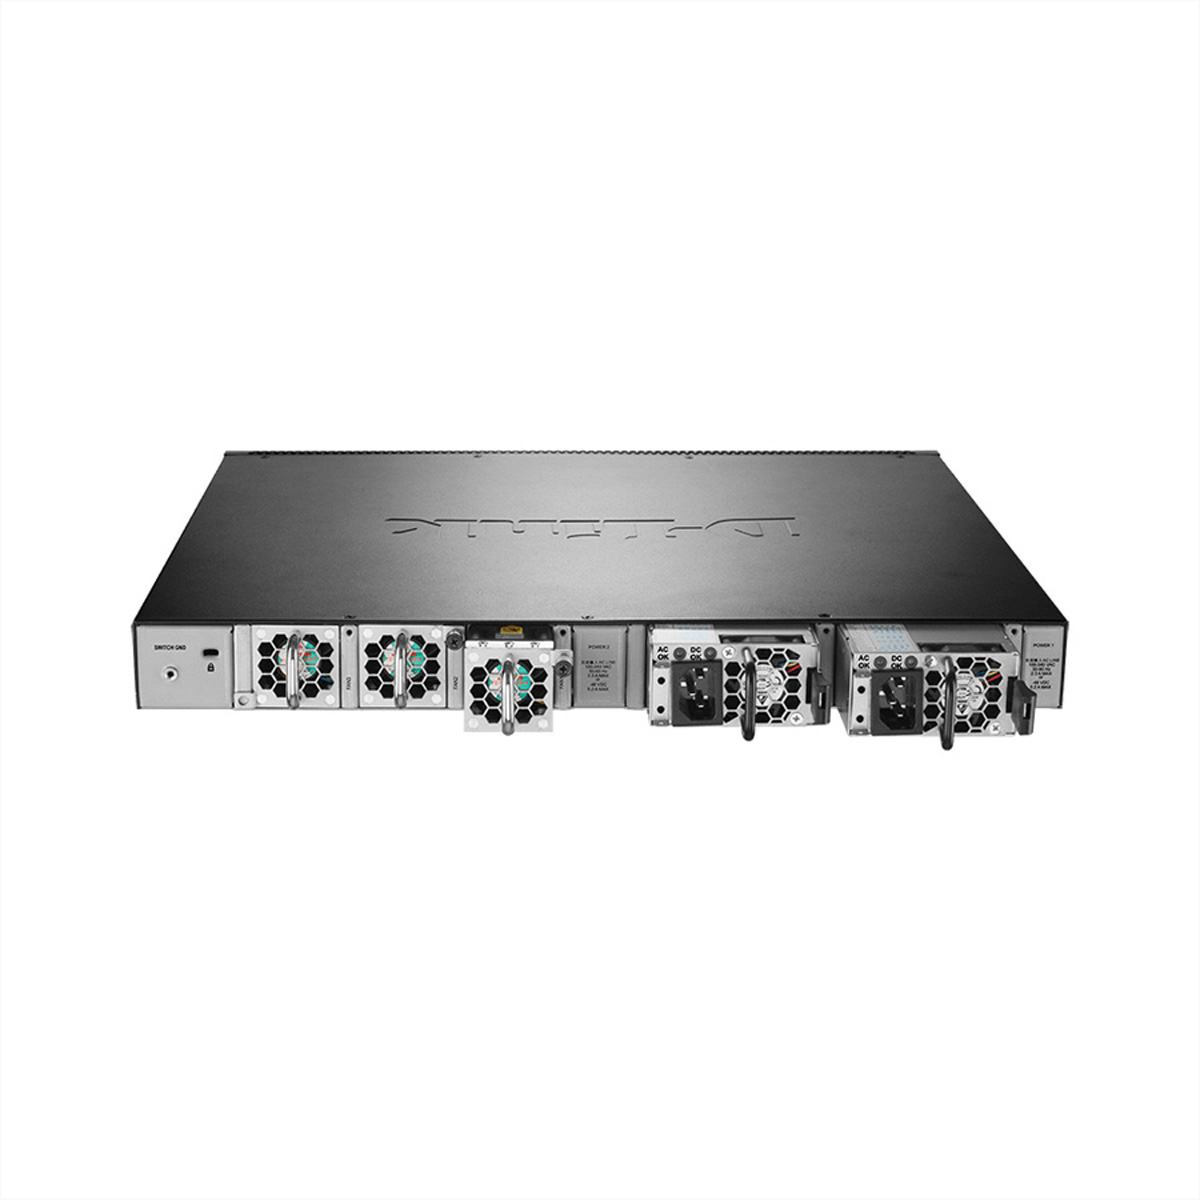 Layer2 D-LINK Managed Ethernet Switch Switch 24-Port 10G 4x Combo Stack Gigabit DXS-3400-24TC